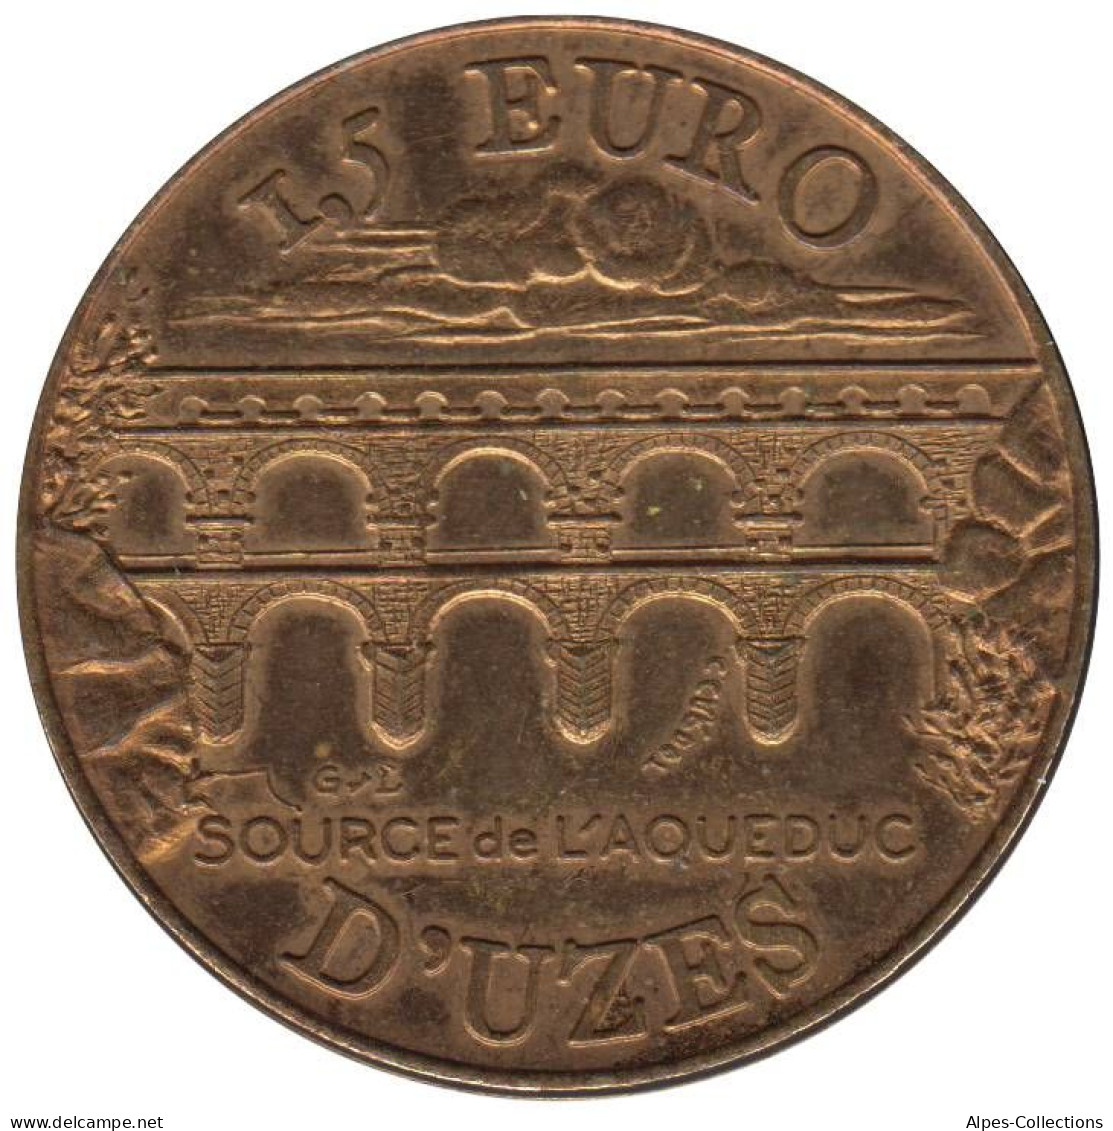 UZES - EU0015.1 - 1,5 EURO DES VILLES - Réf: NR - 1997 - Euros Of The Cities